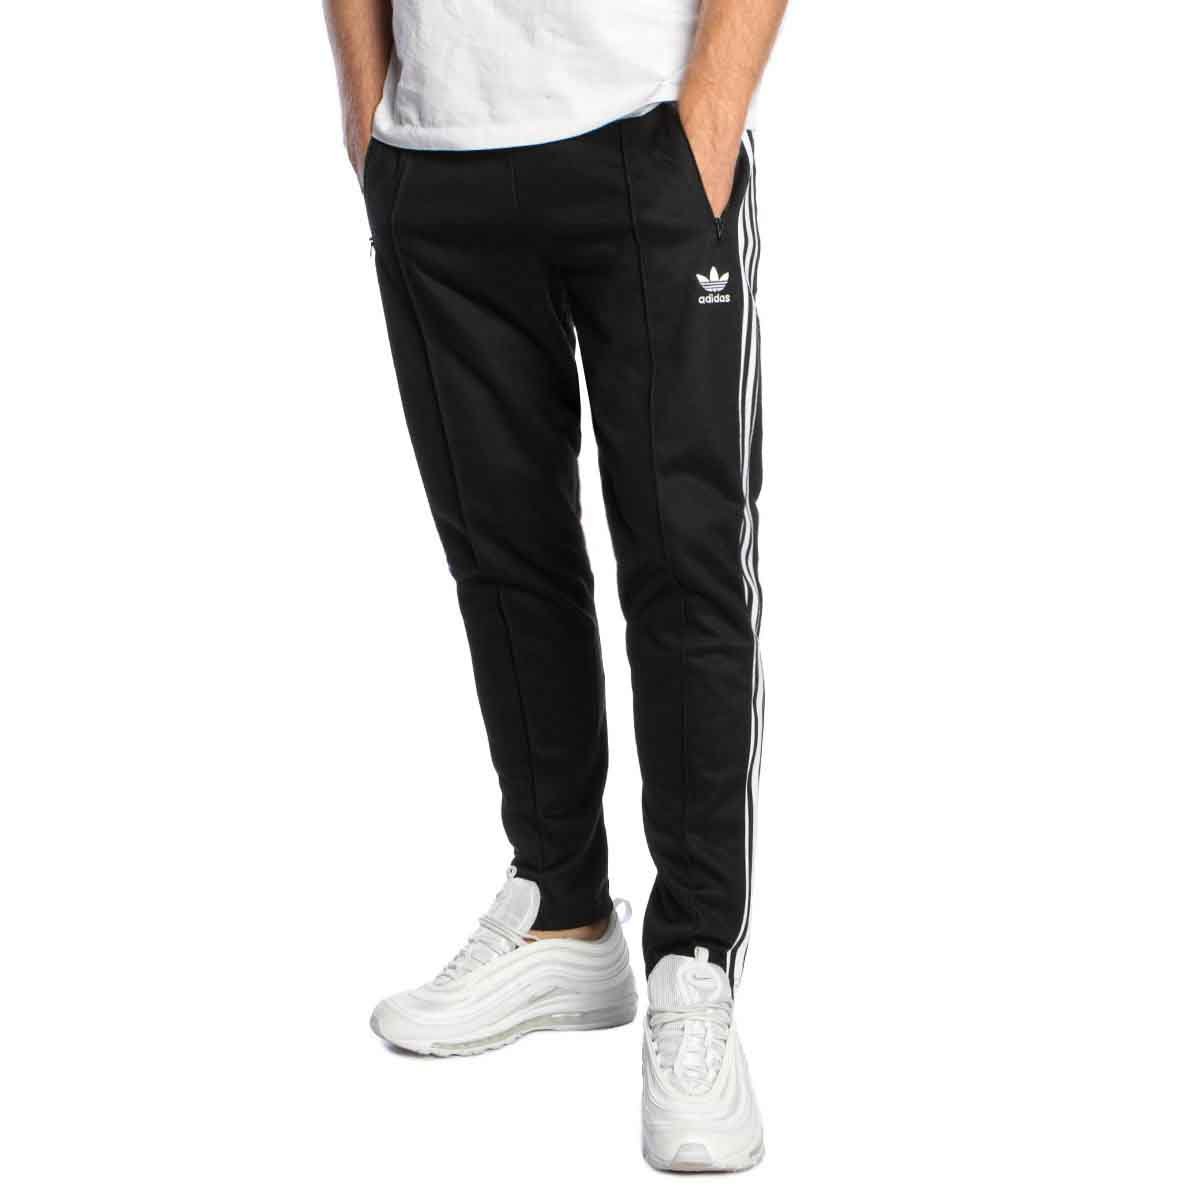 Adidas Originals sweatpants Beckenbauer TP black | Bludshop.com